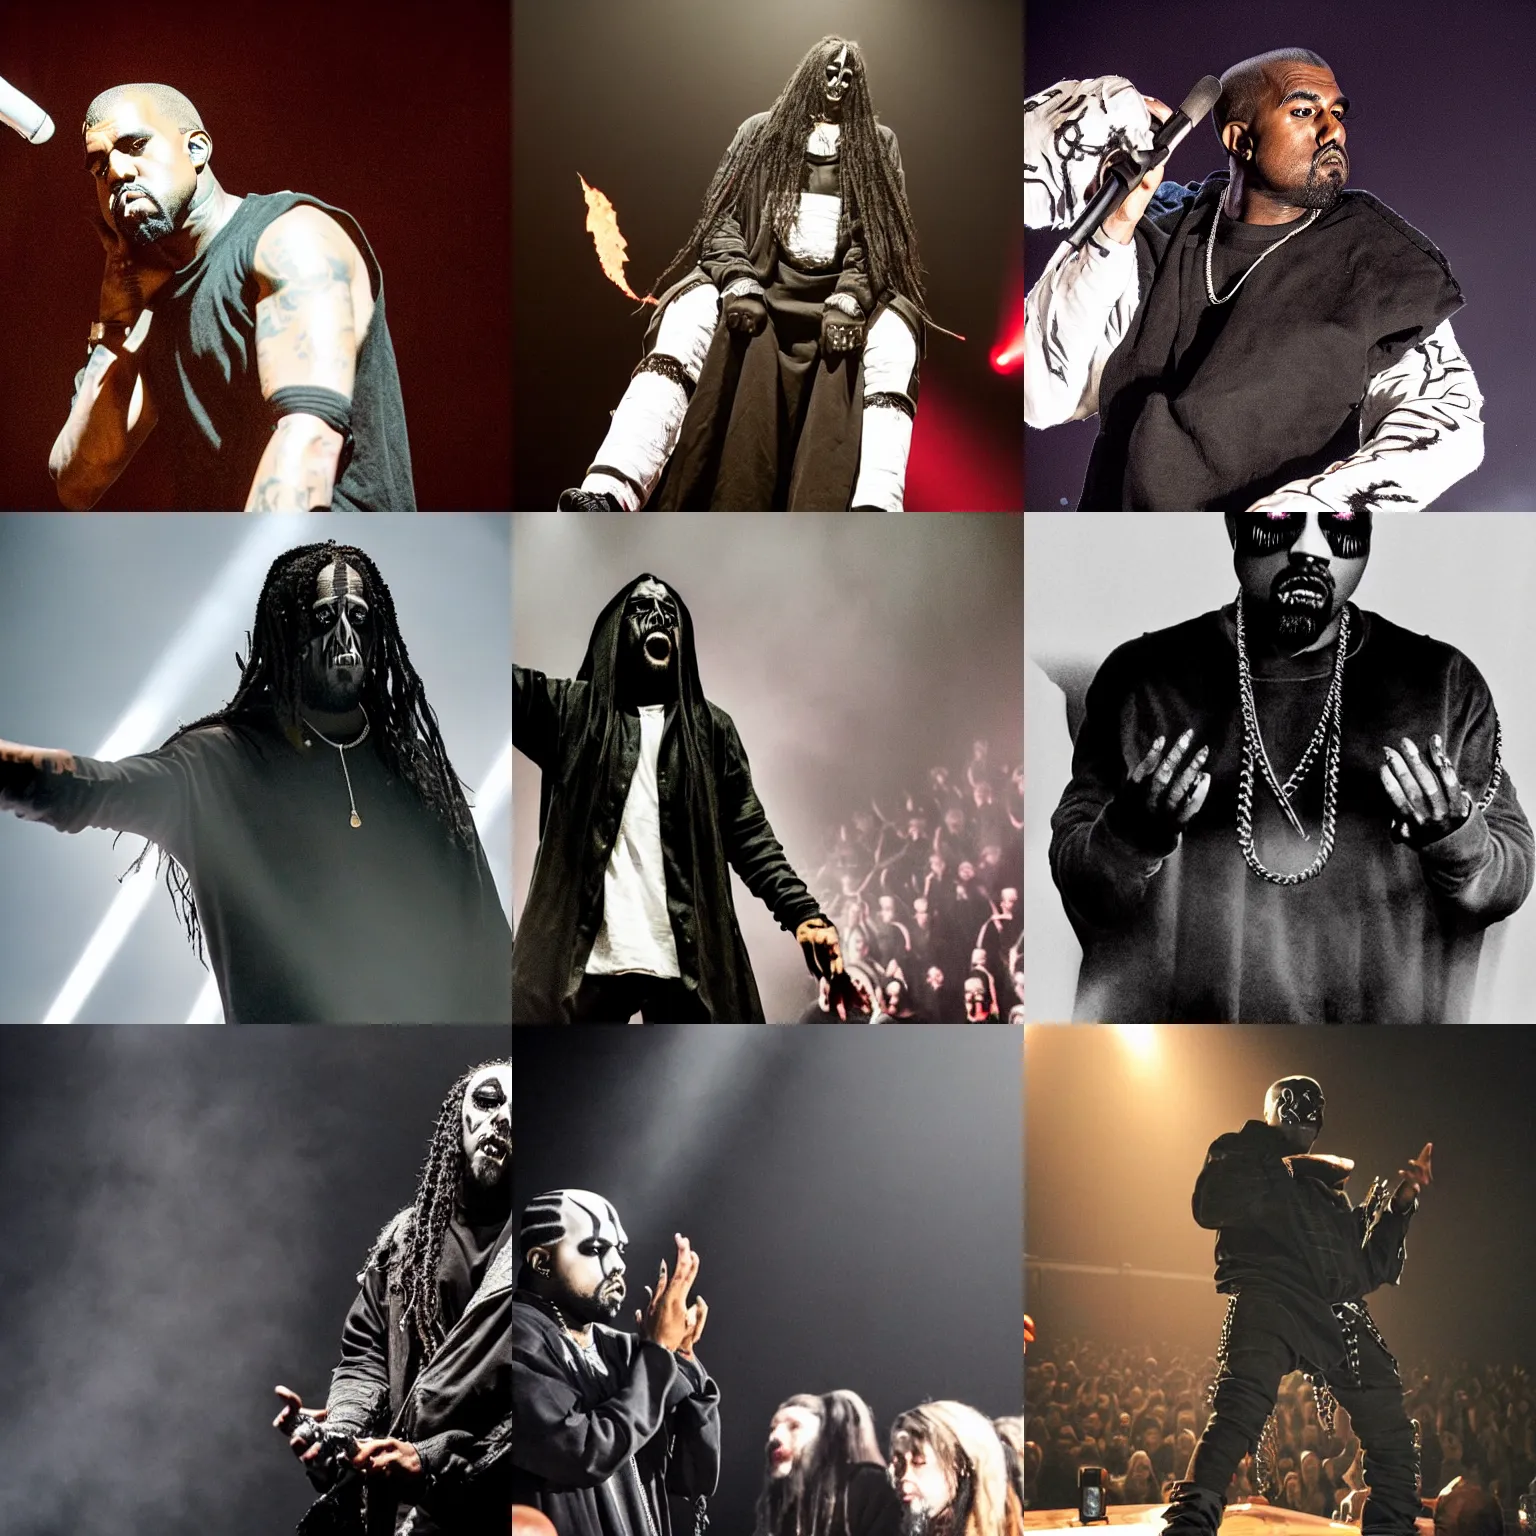 Prompt: Kanye West wearing corpse paint, performing in black metal concert